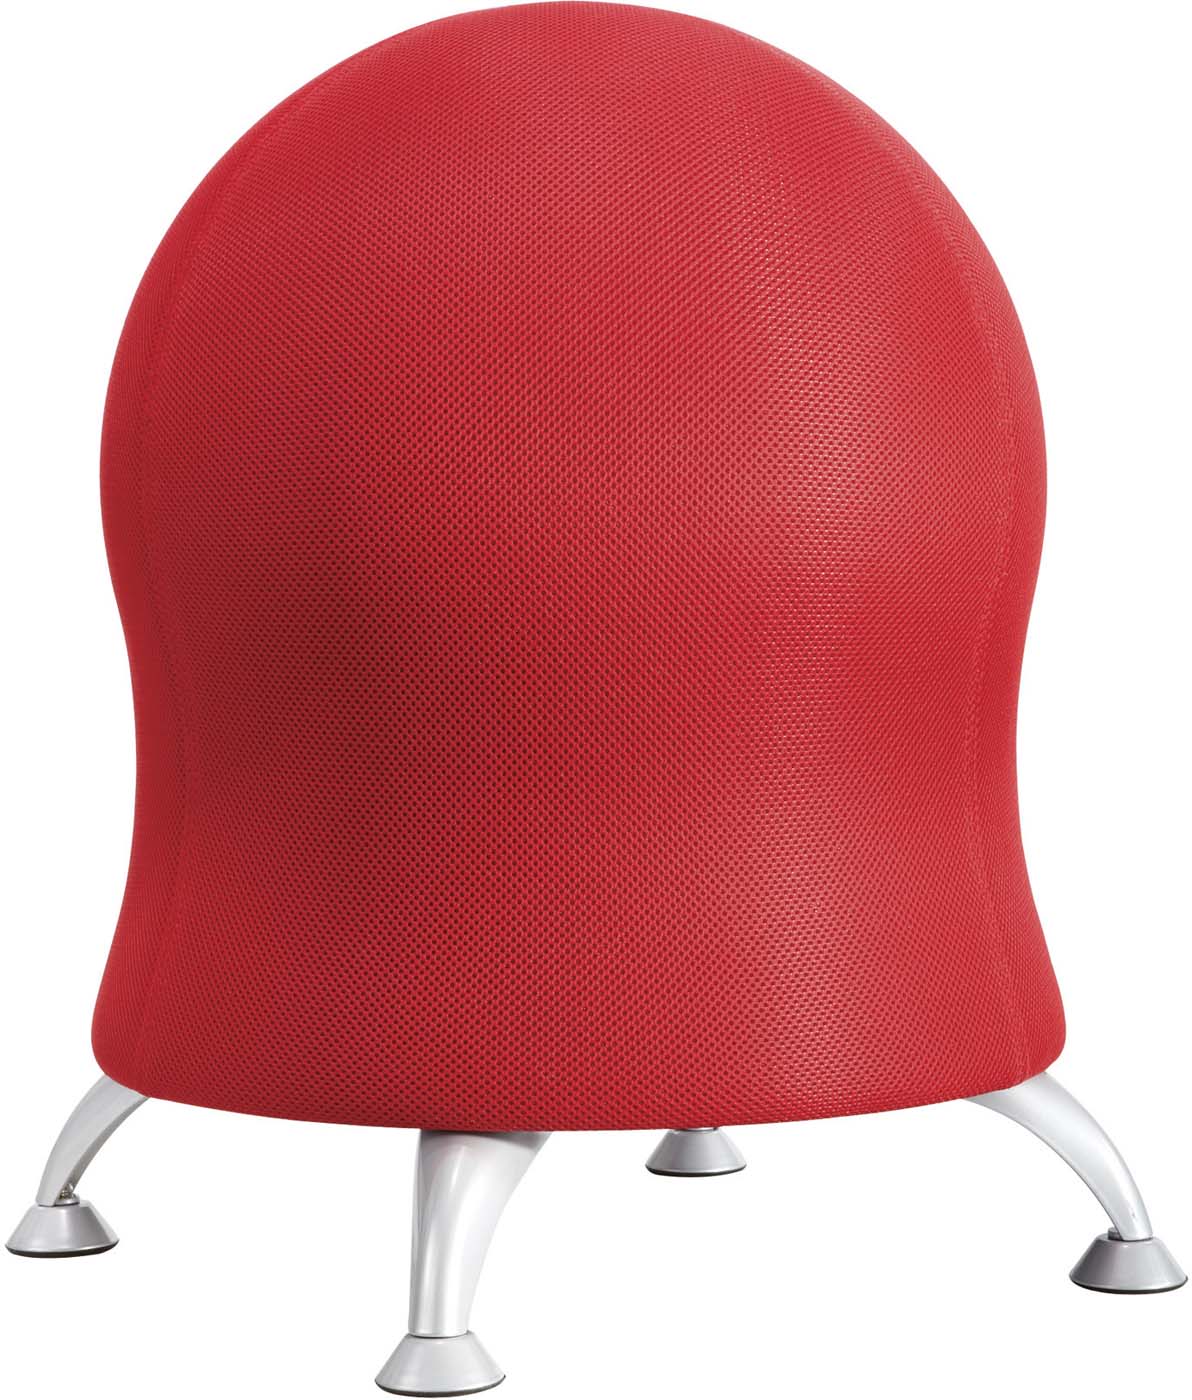 Safco Ball Chairs